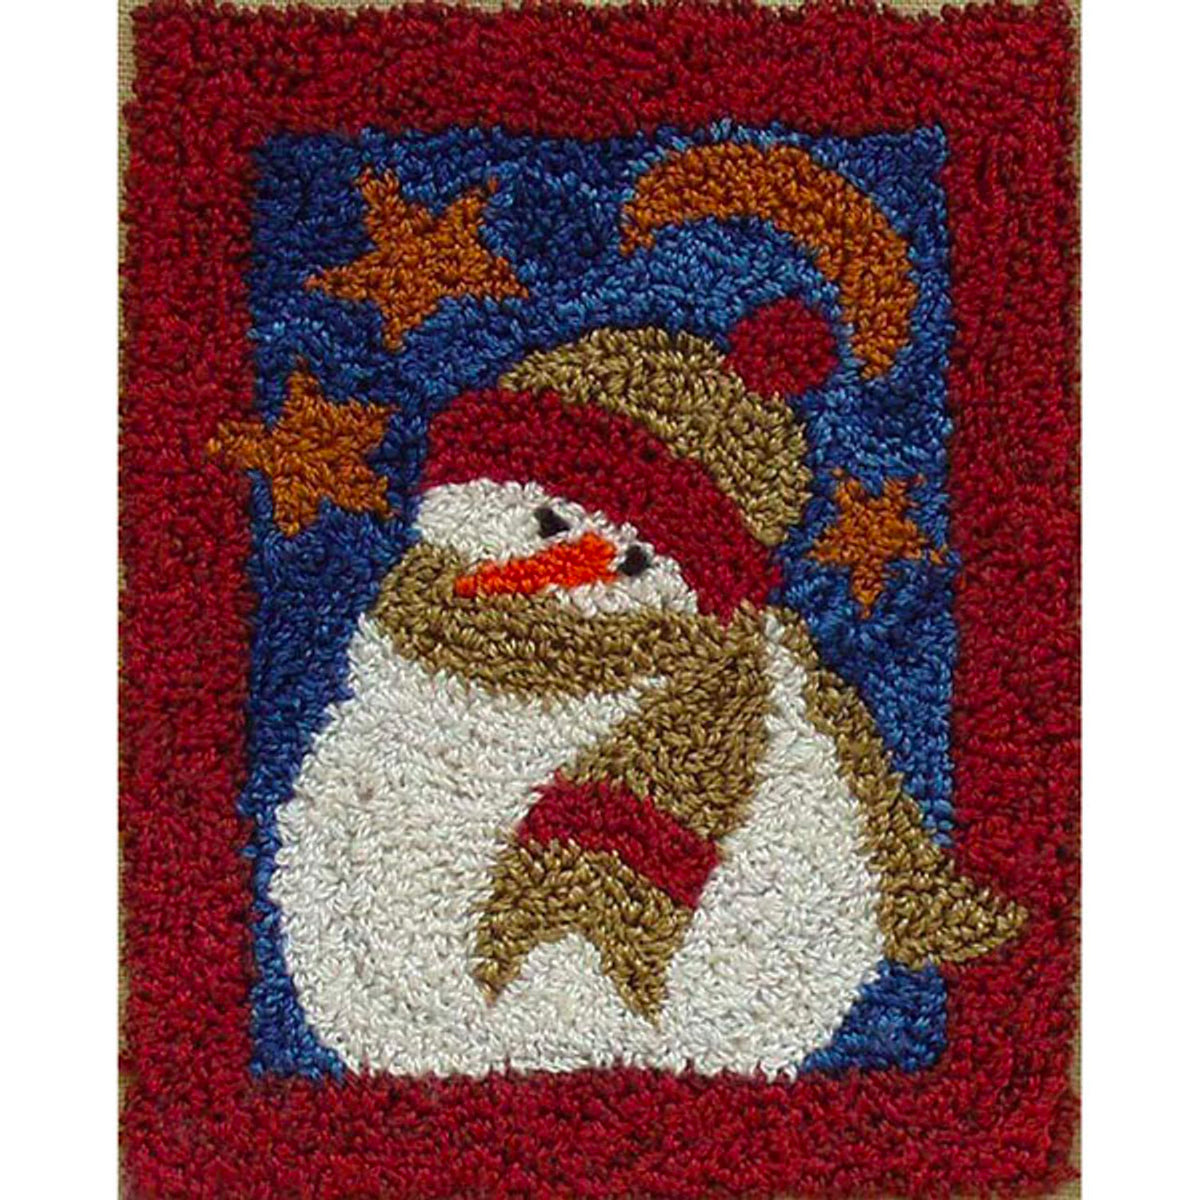 Midnight Snowman Punch Needle Embroidery Kit